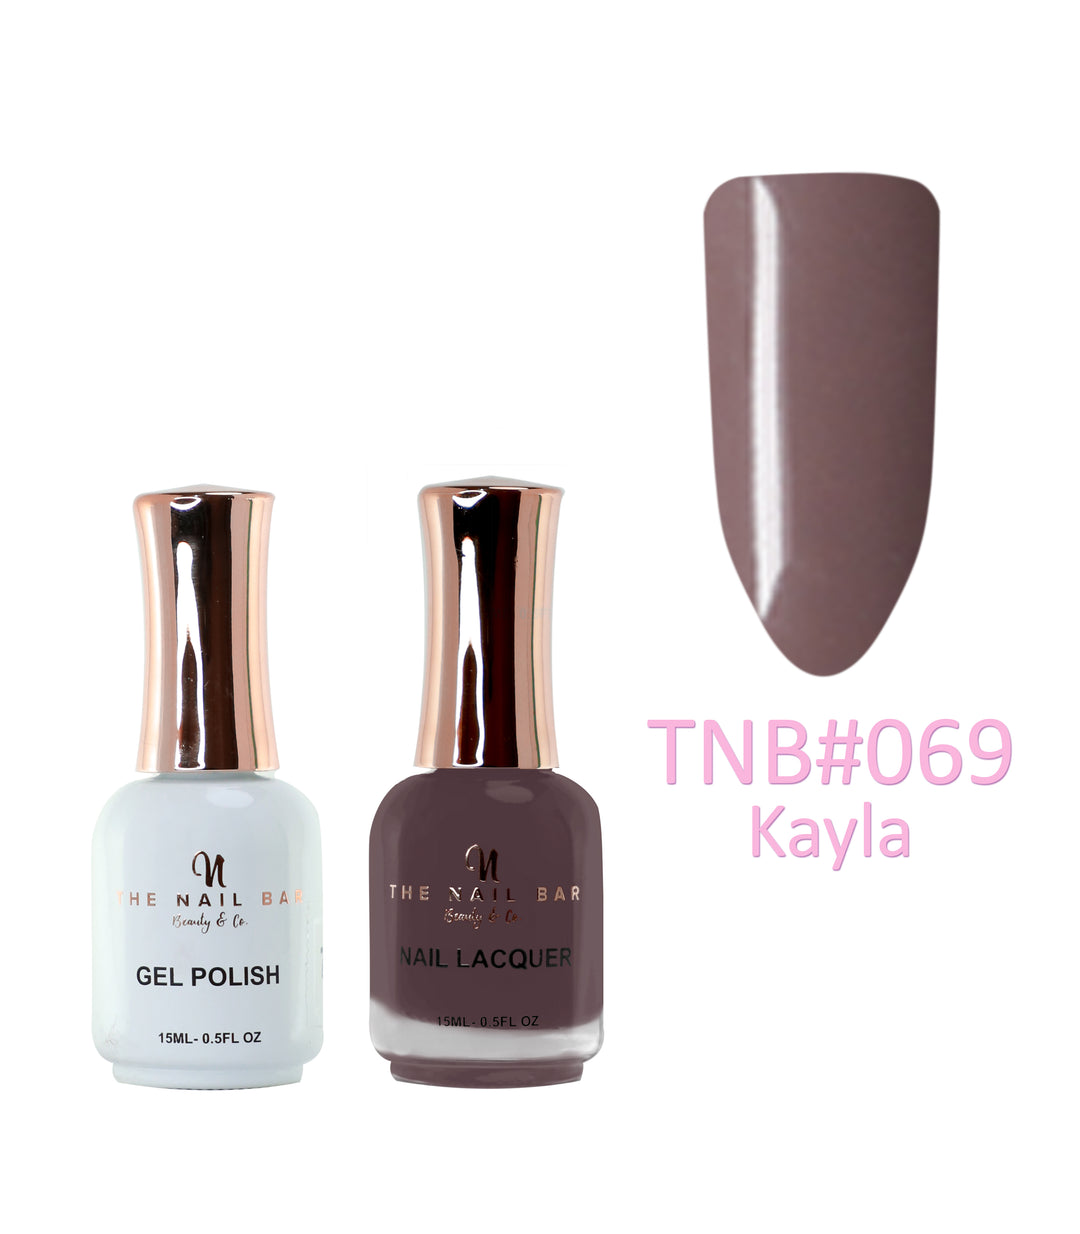 Dual Polish/Gel colour matching (15ml) - Kayla - The Nail Bar Beauty & Co.